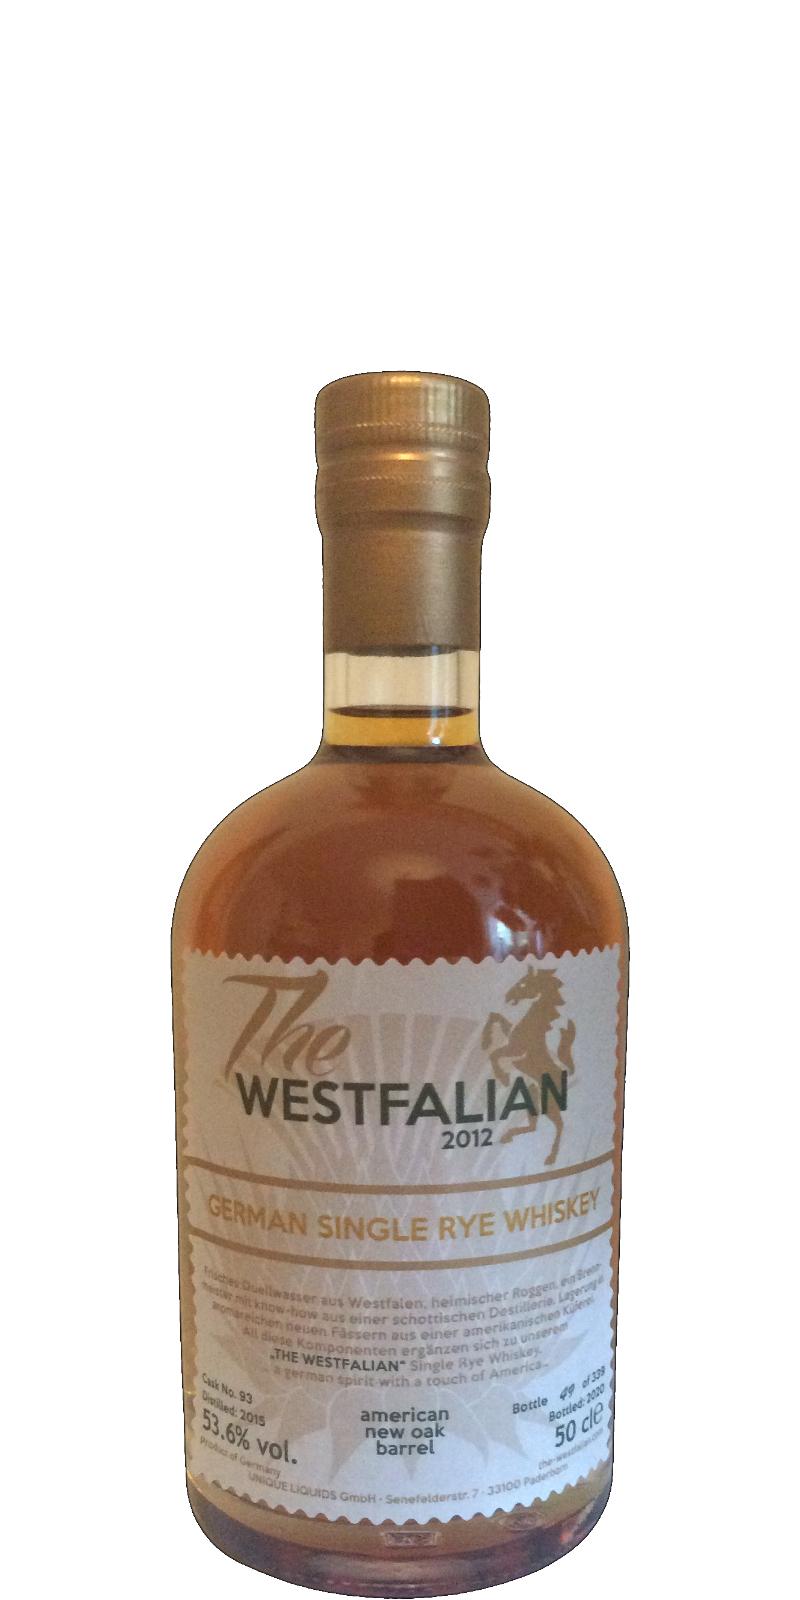 The Westfalian 2015